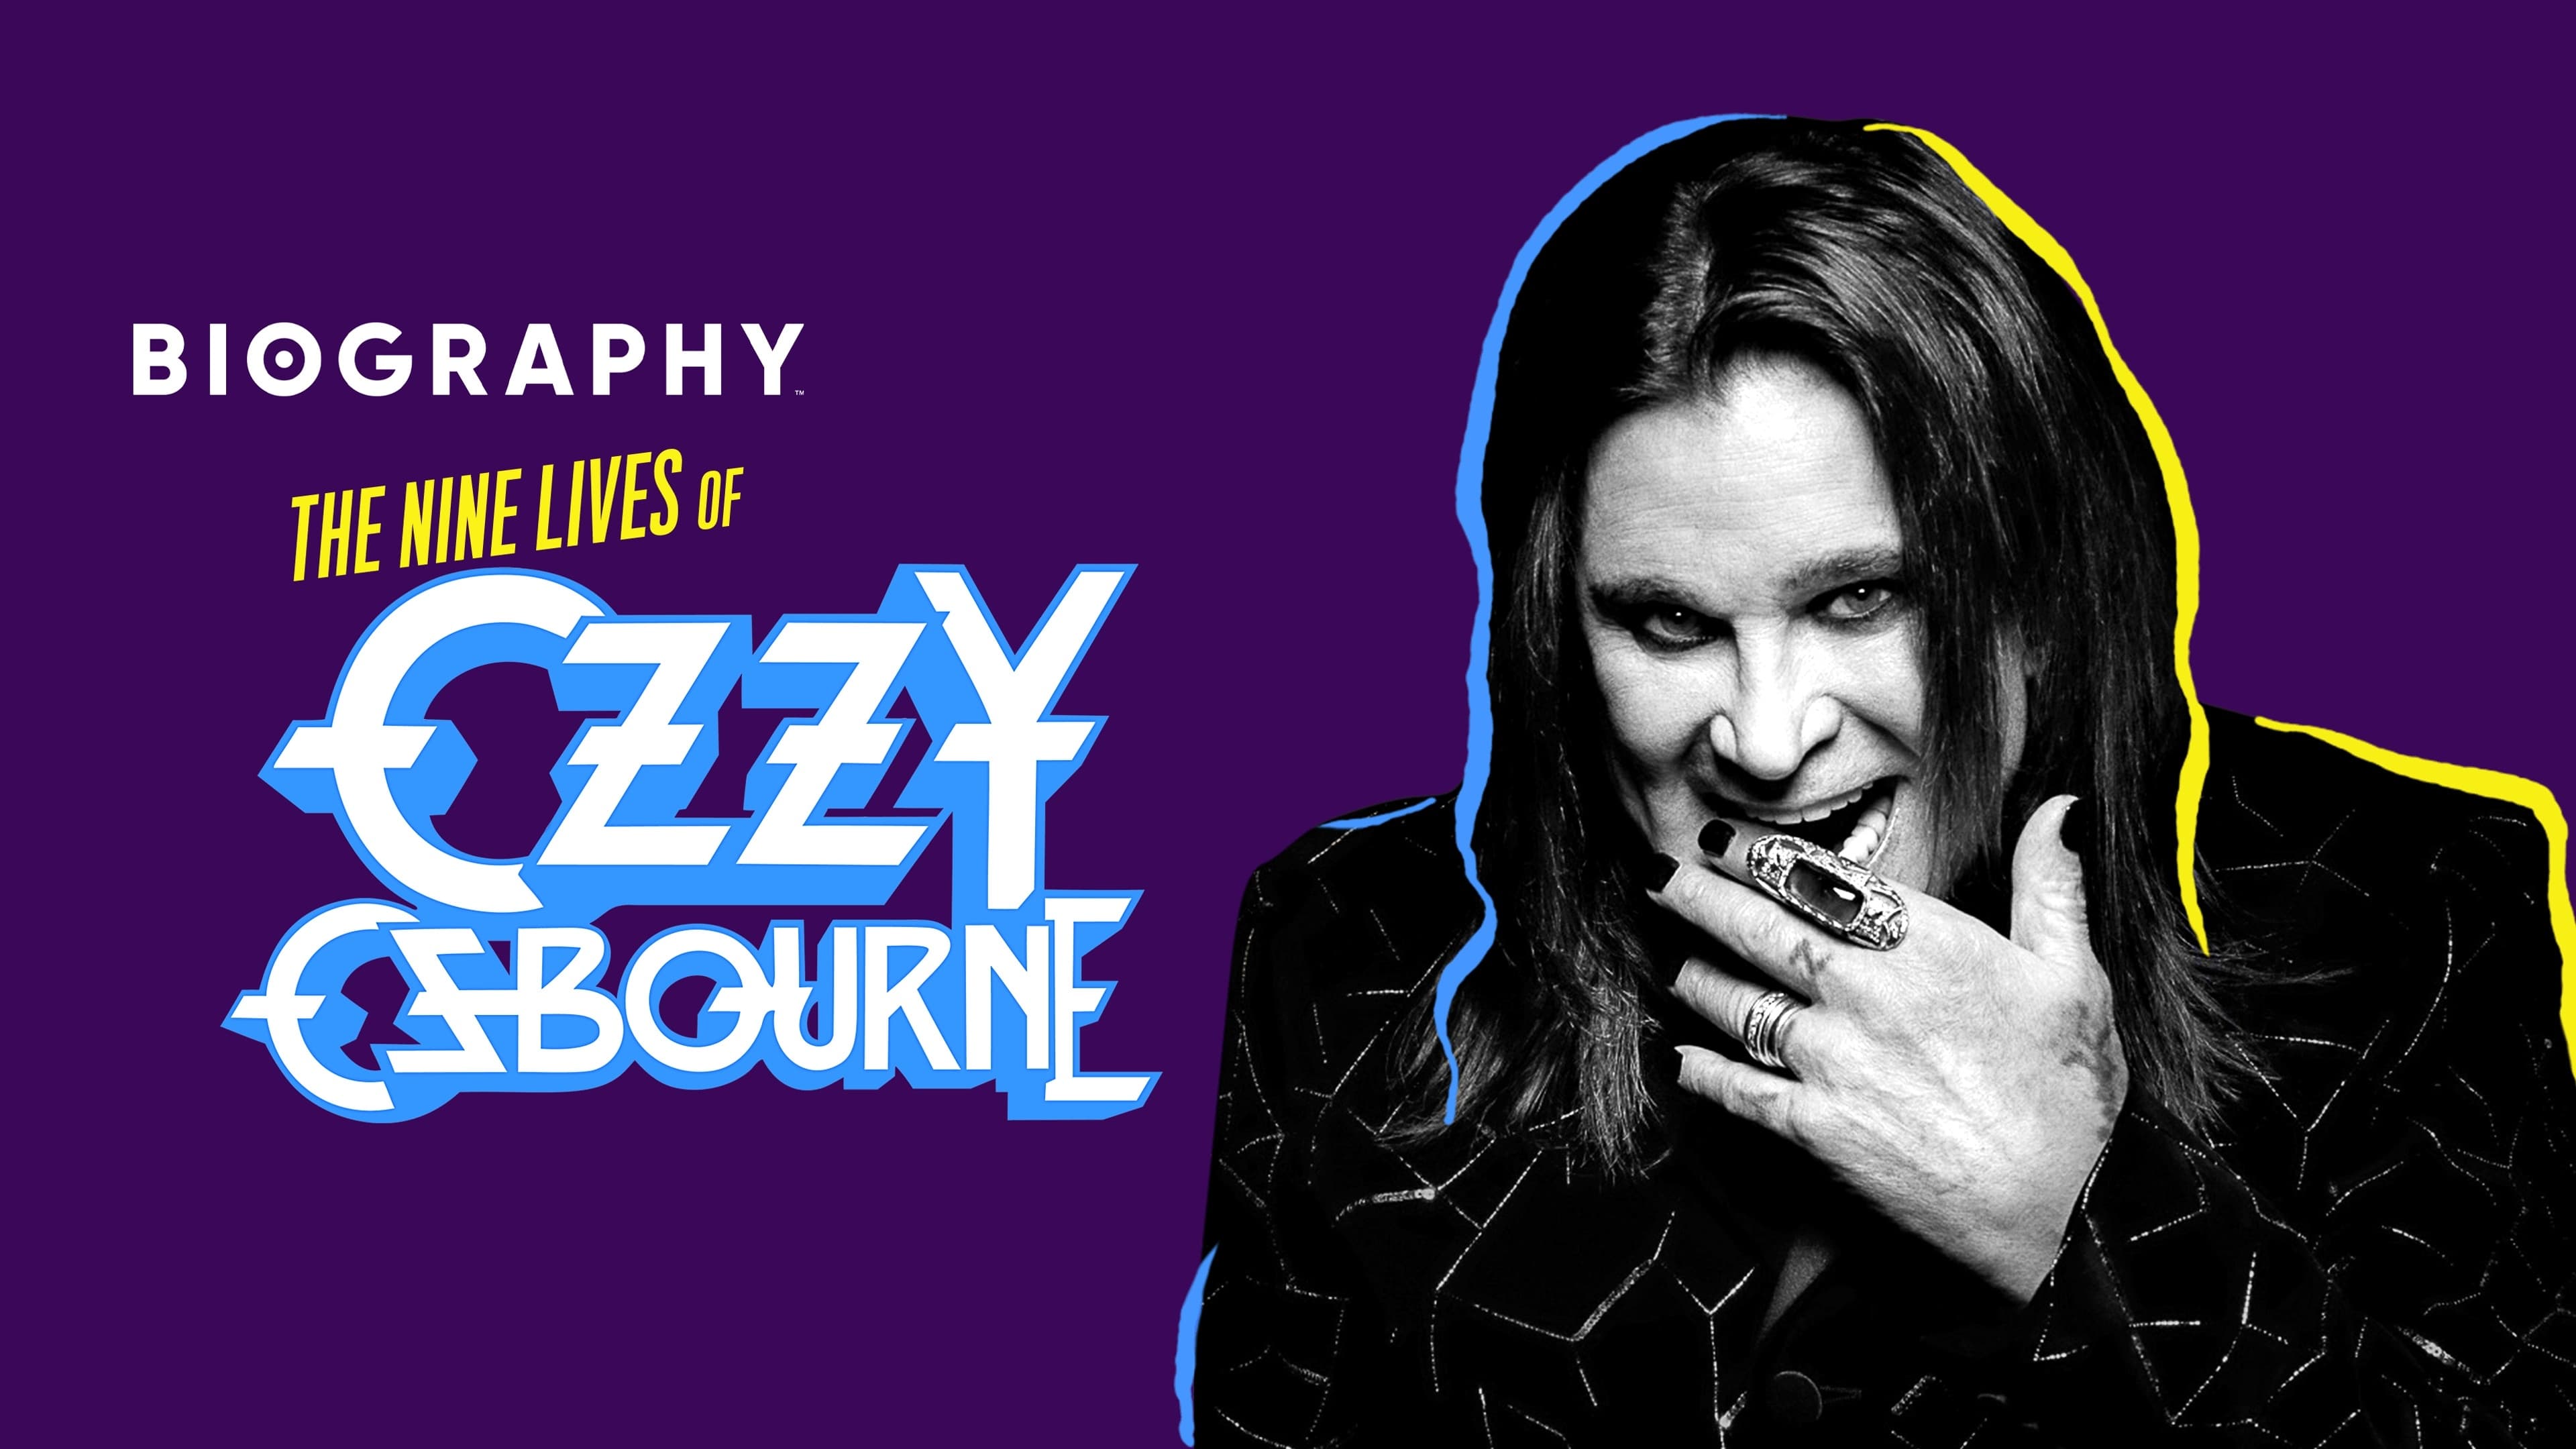 Watch Biography: The Nine Lives of Ozzy Osbourne